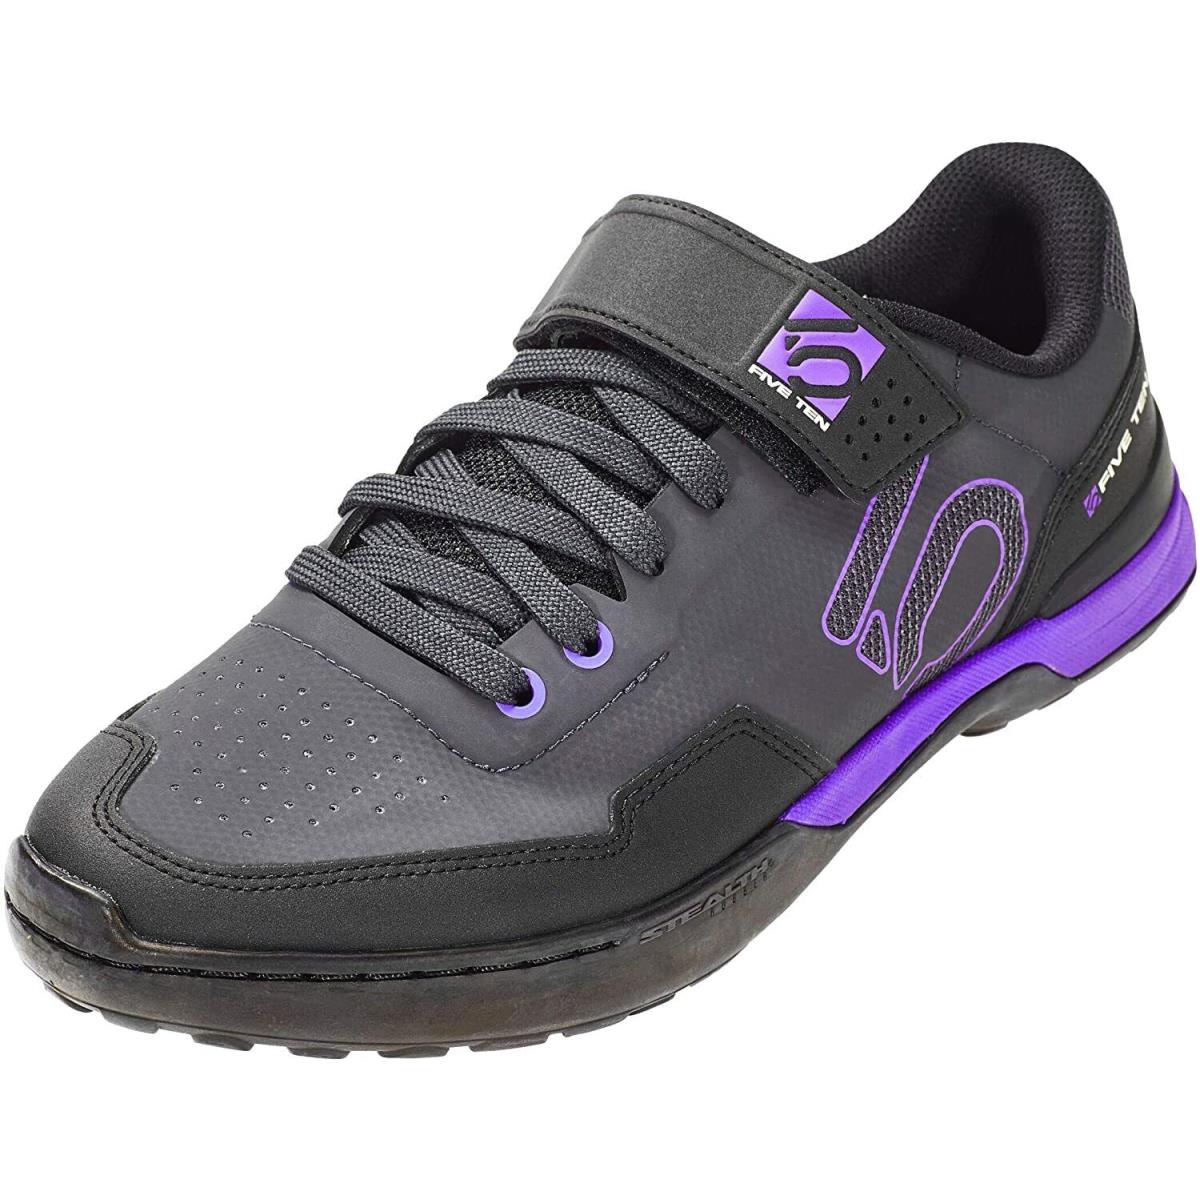 Womens Adidas Five Ten Kestrel Lace Mountain Bike Shoes Black Purple Shoes - Black